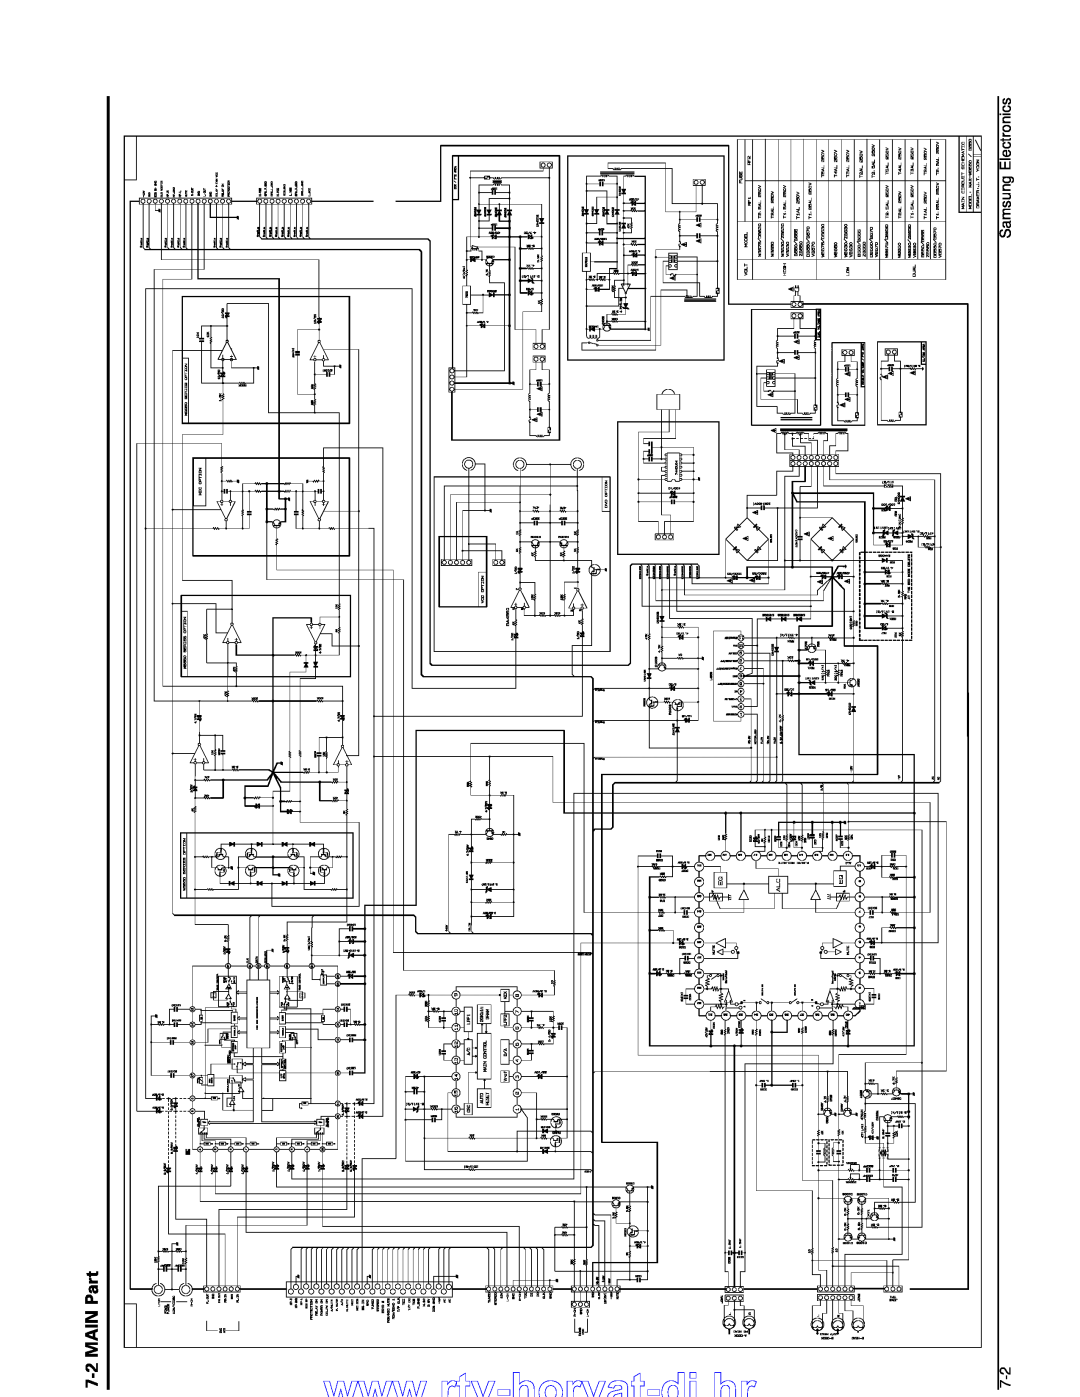 Samsung MAX-B550 service manual 7-2MAIN Part, Samsung Electronics 